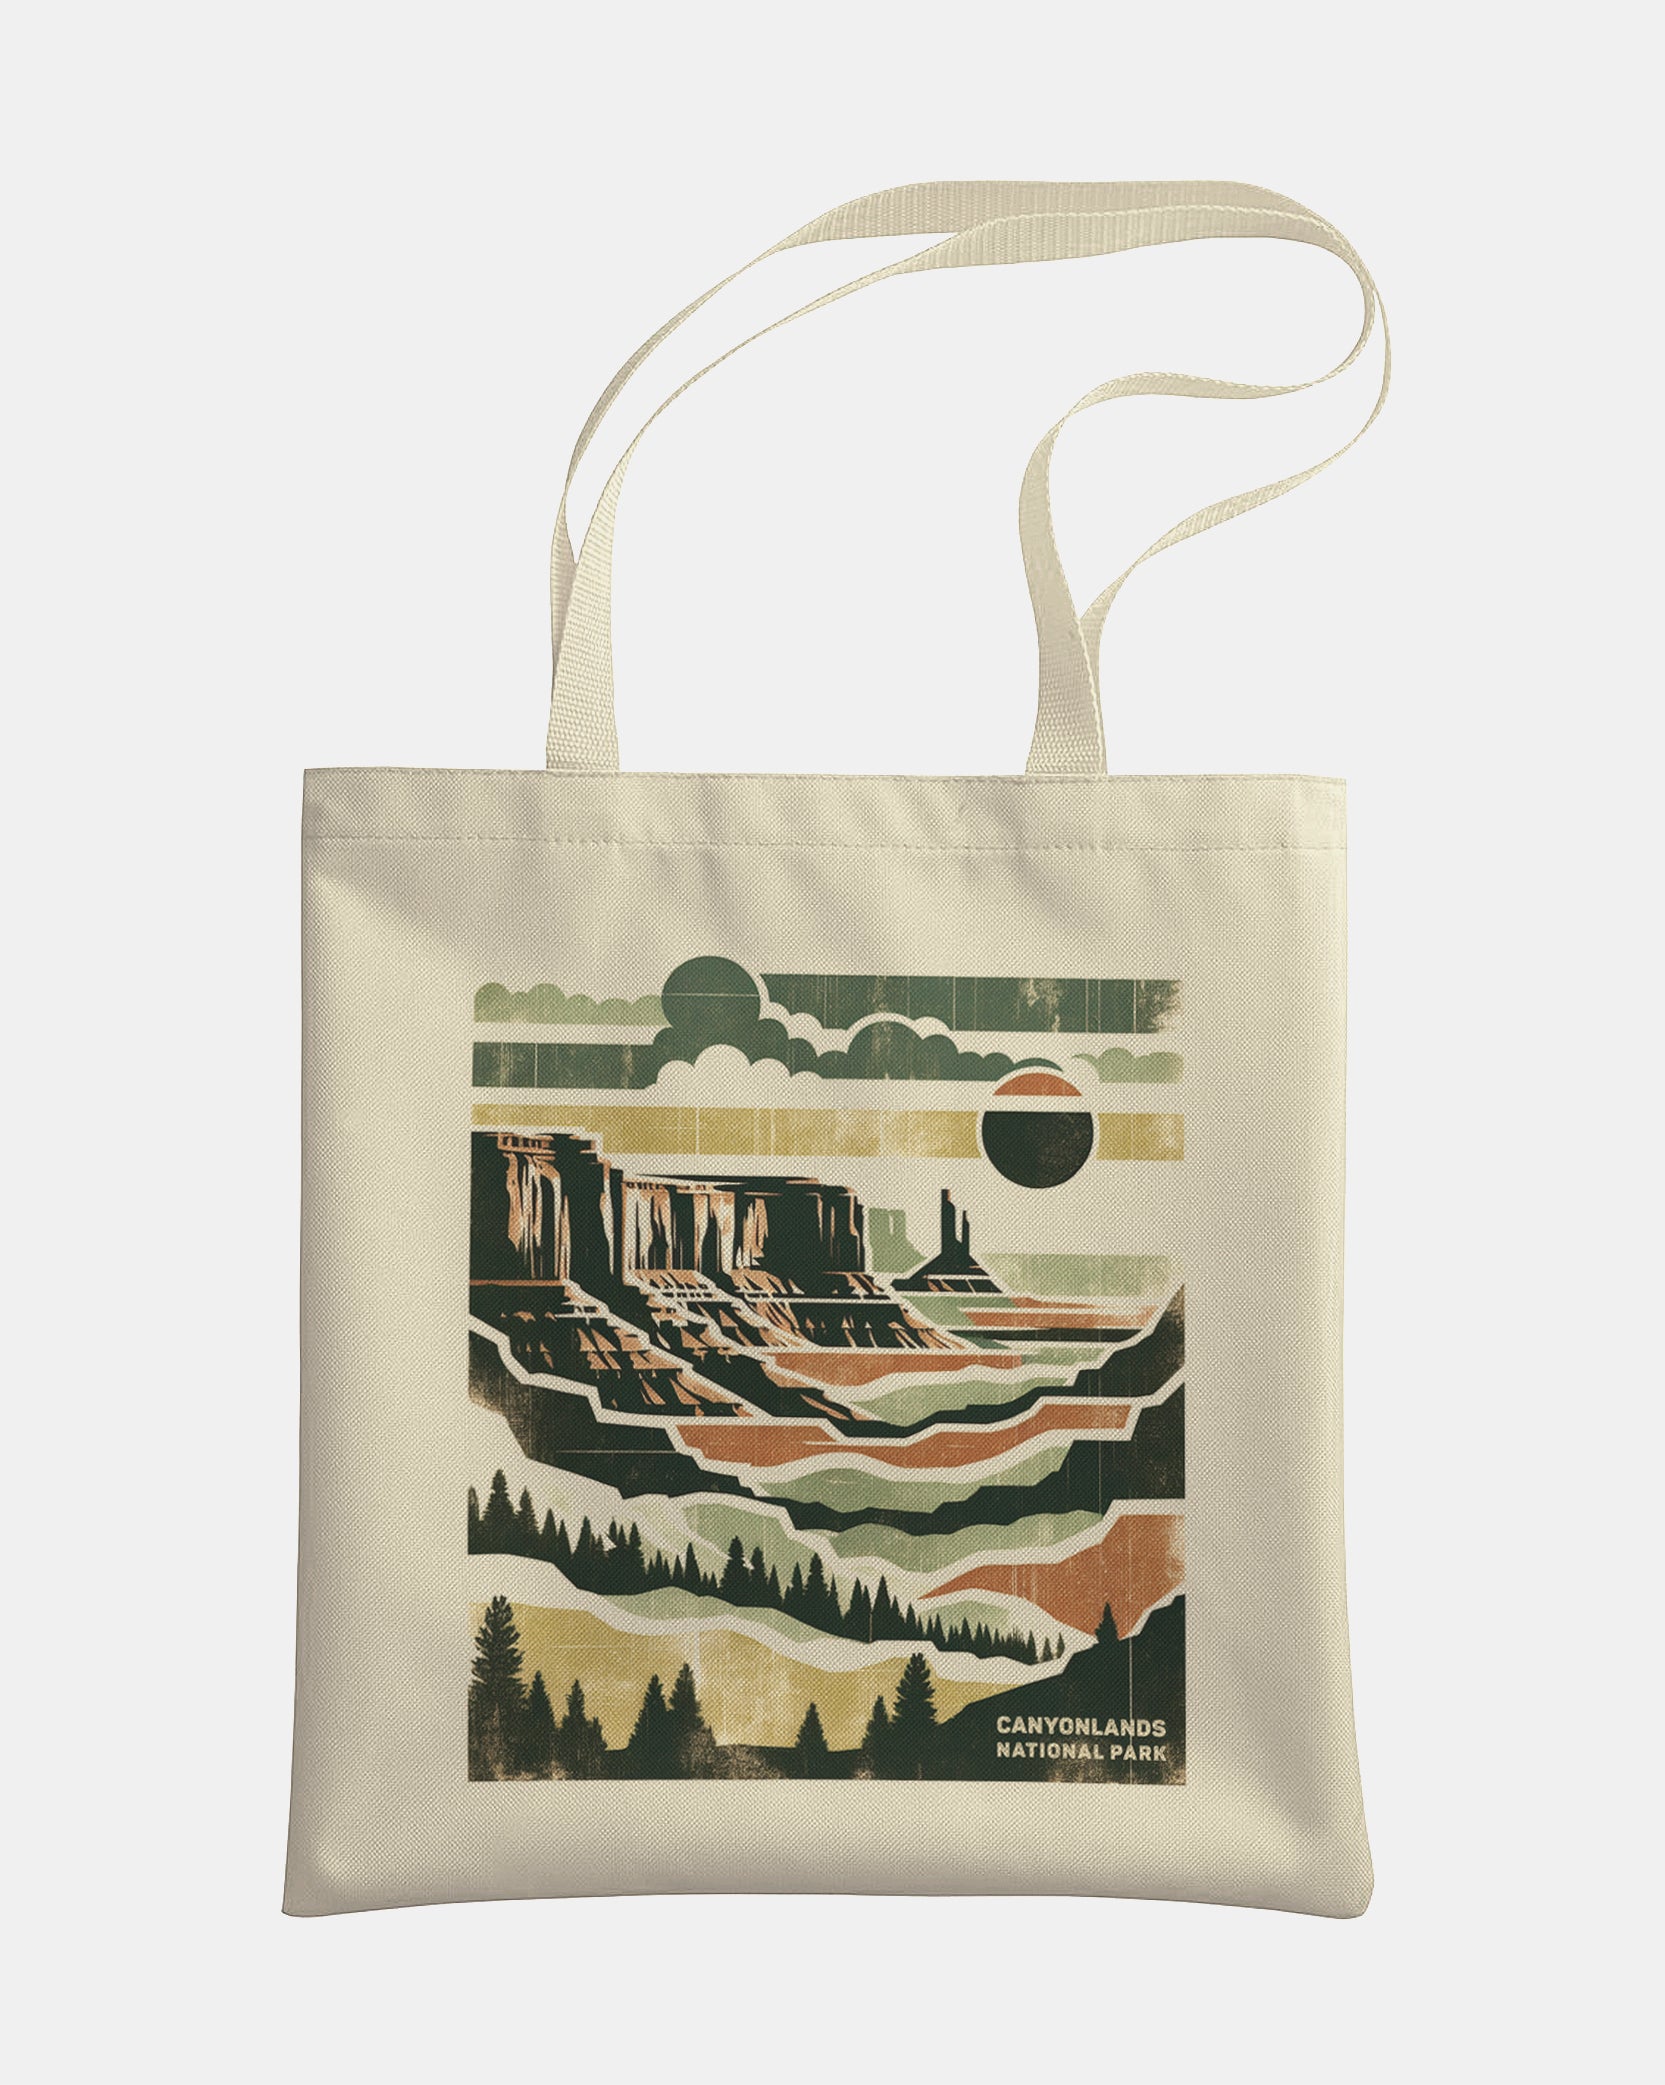 Canyonlands National Park Tote Bag